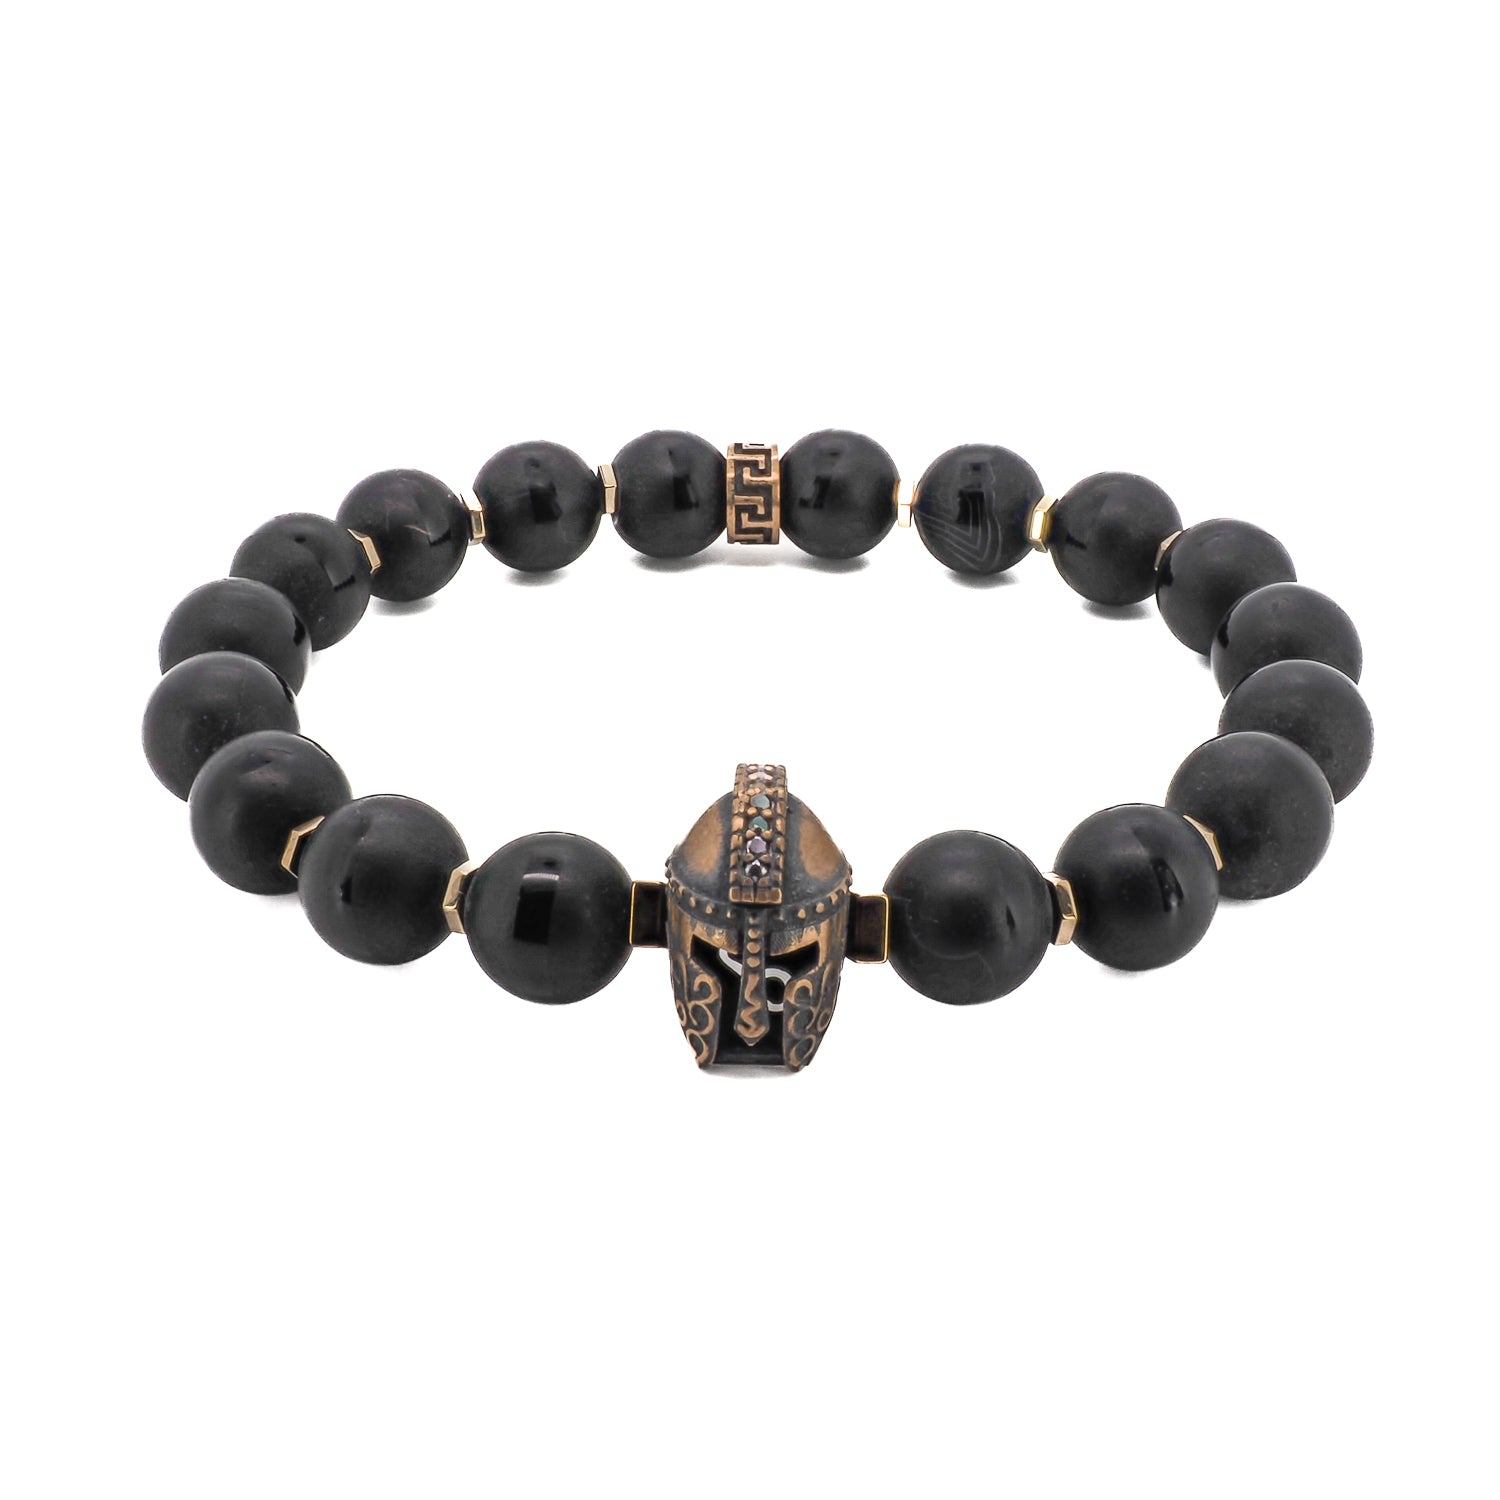 Black Onyx Gladiator Bracelet featuring a bronze gladiator helmet bead and black onyx stone beads.